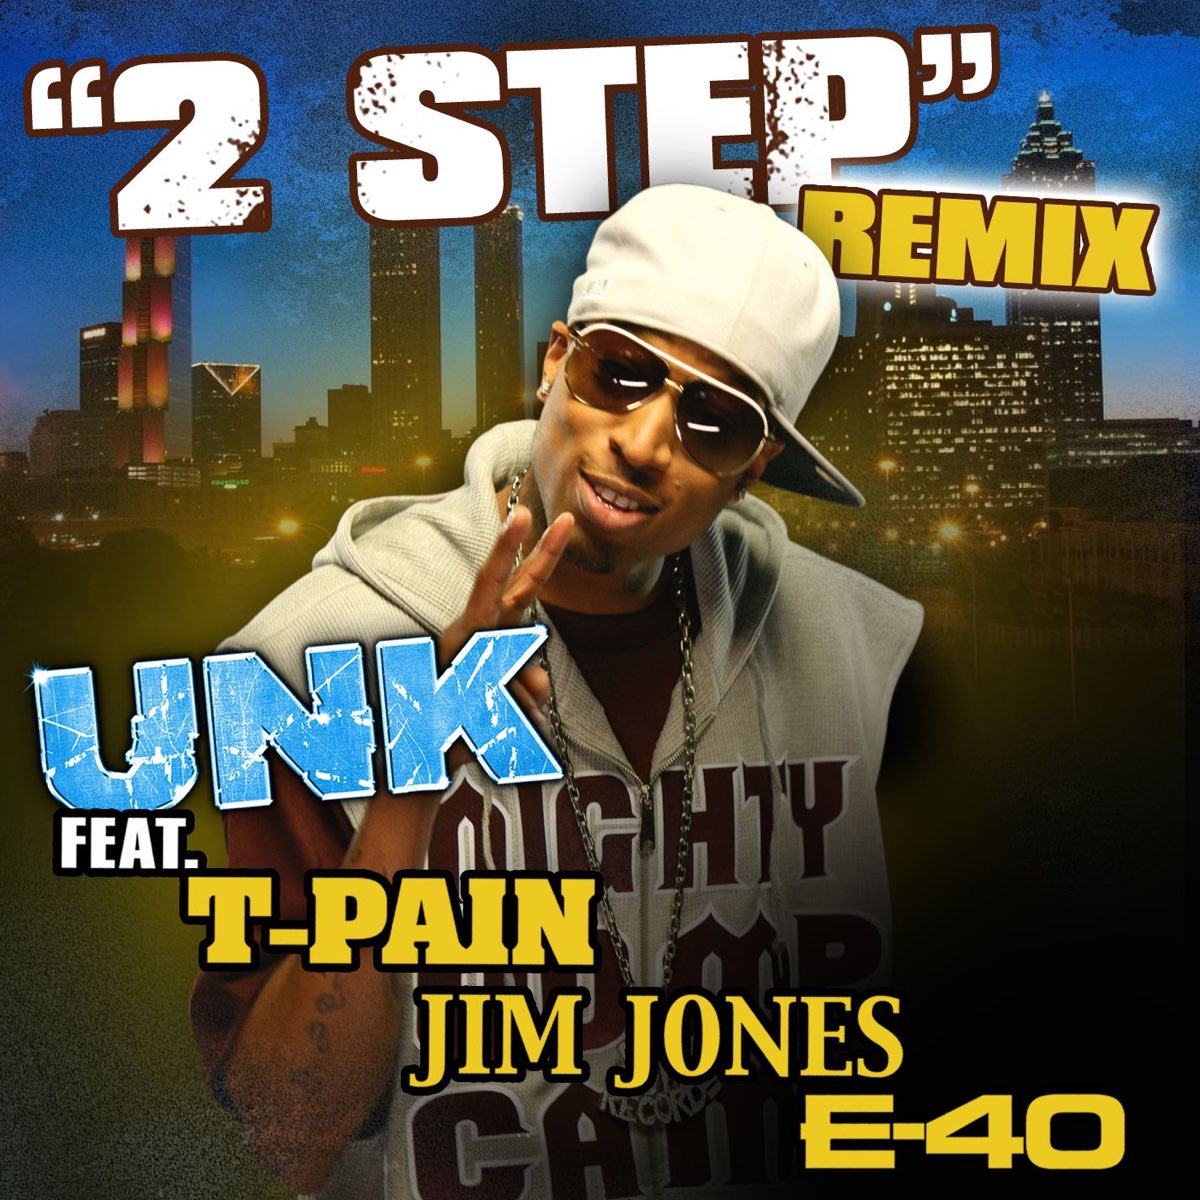 2 Step (Remix) - Single by Unk featuring T-Pain, Jim Jones & E-40 on Apple  Music